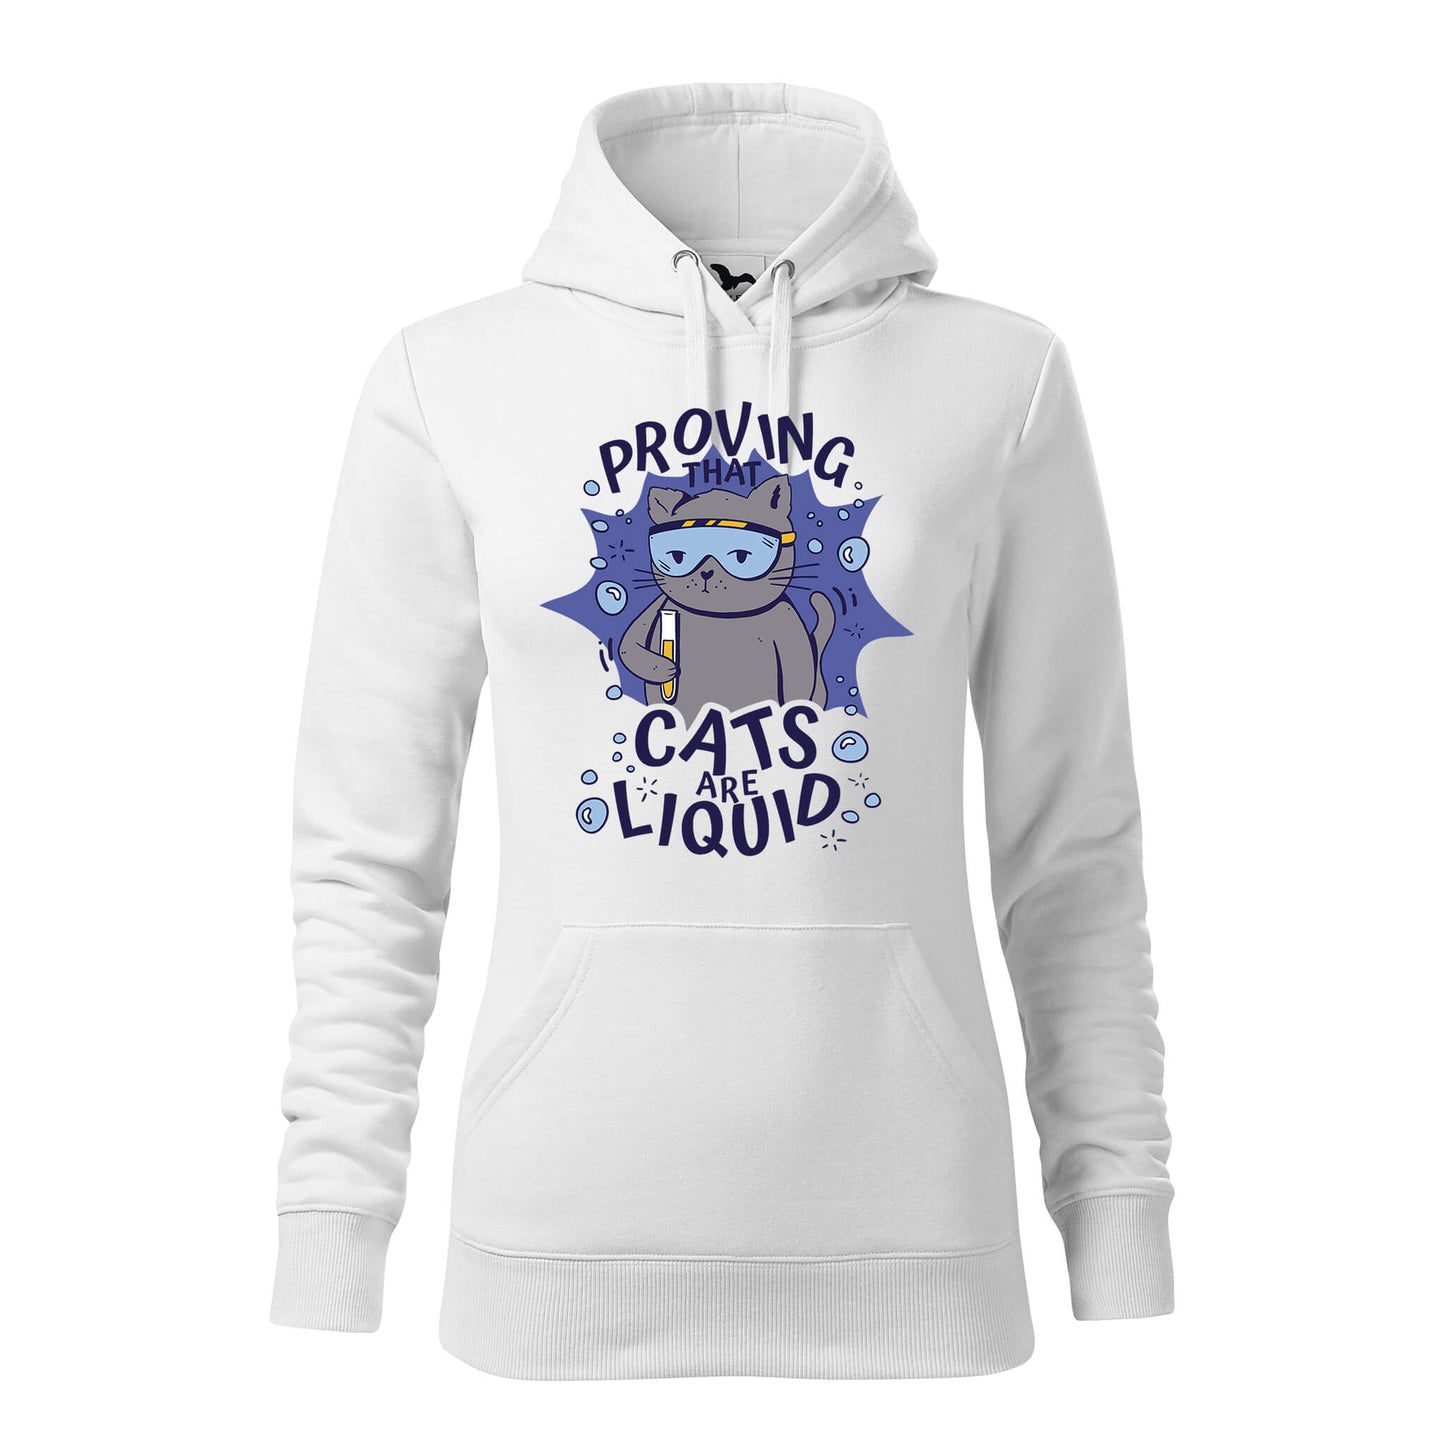 Cats are liquid hoodie - rvdesignprint